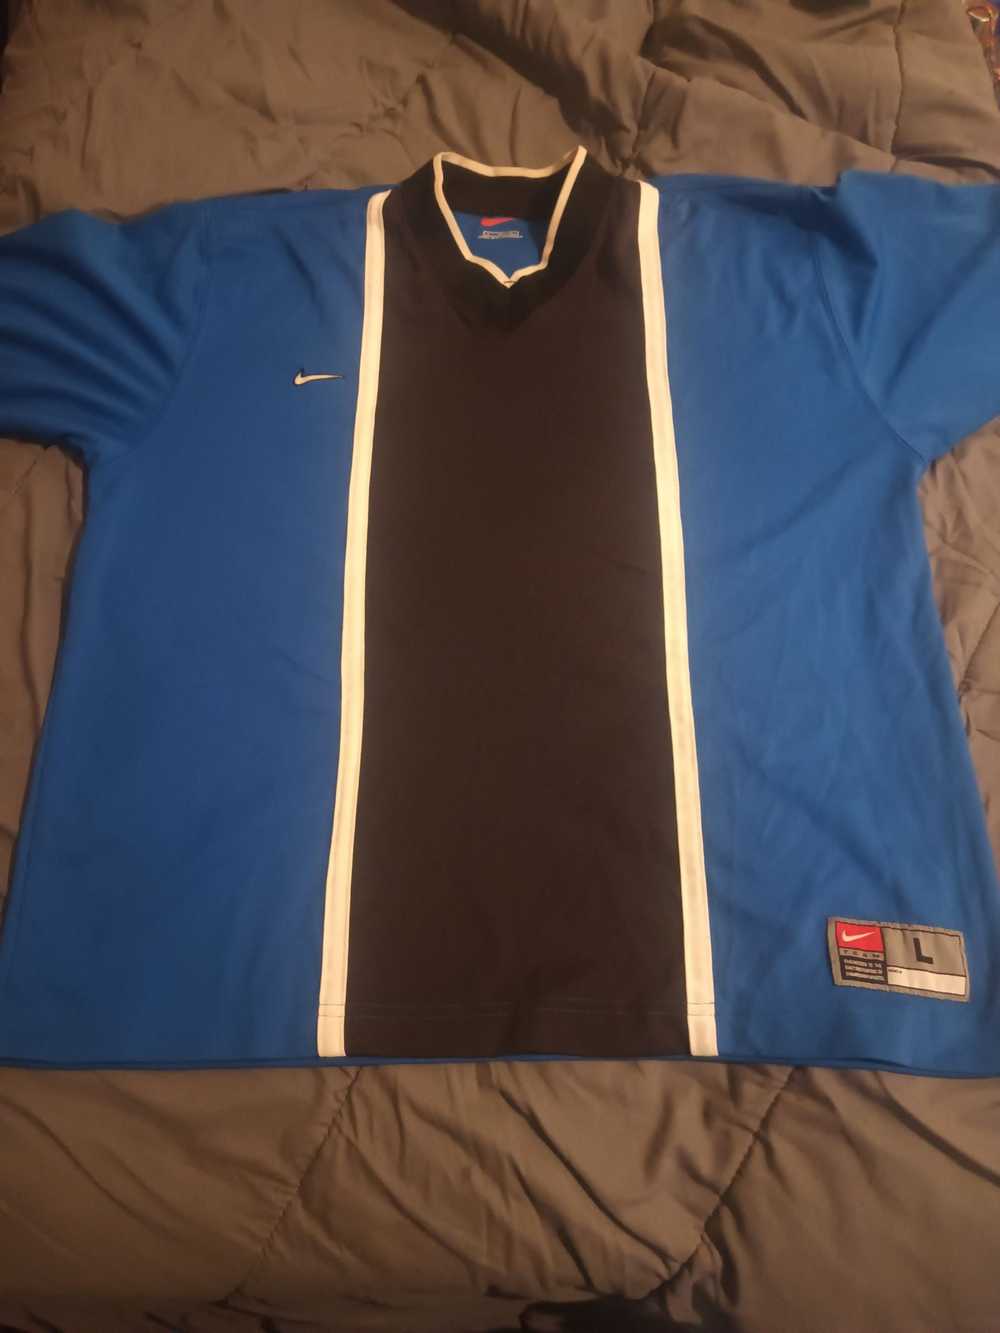 Nike Vintage 90s soccer style jersey - image 1